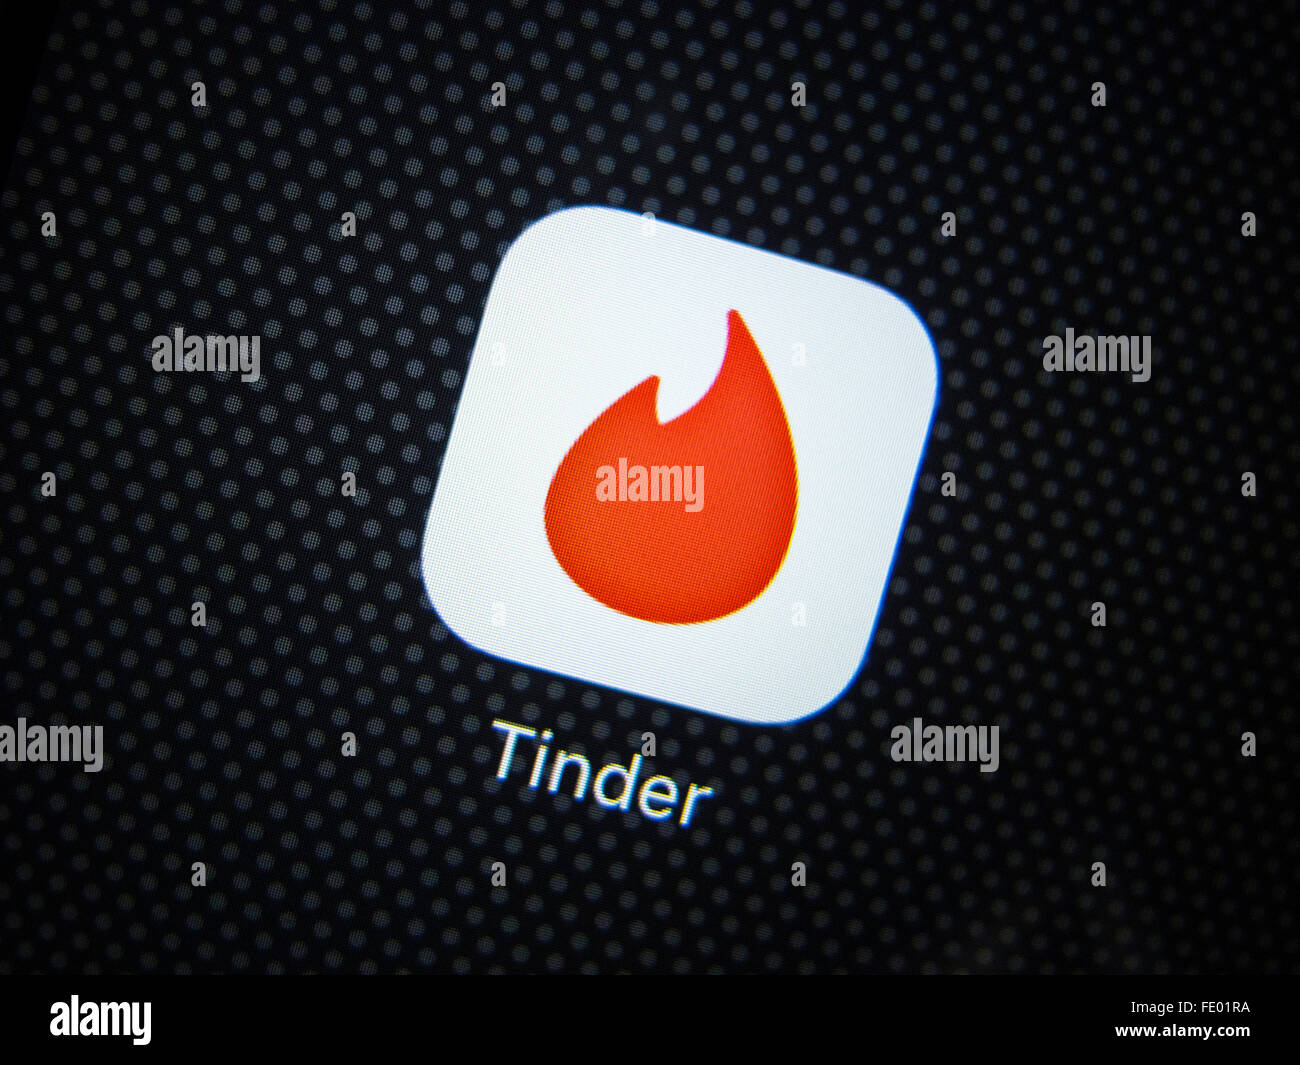 Tinder dating app logo on an iPhone smart phone Stock Photo